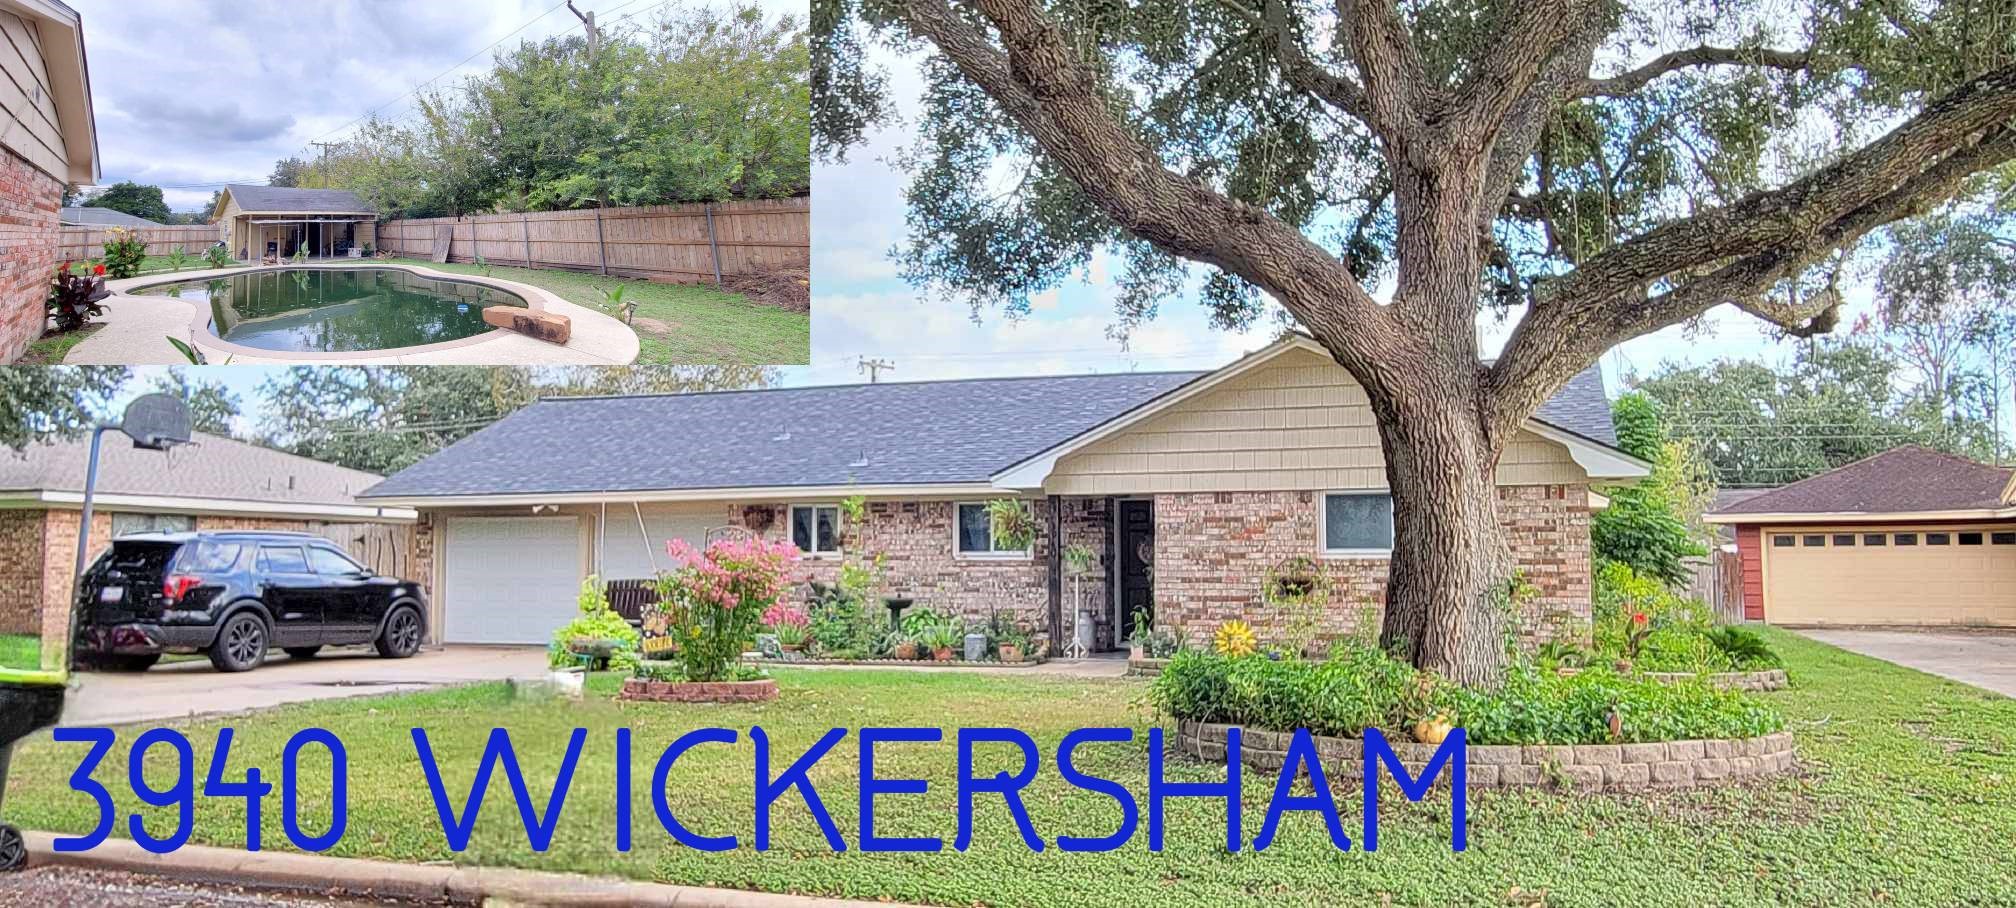 3940 Wickersham Street Property Photo 1